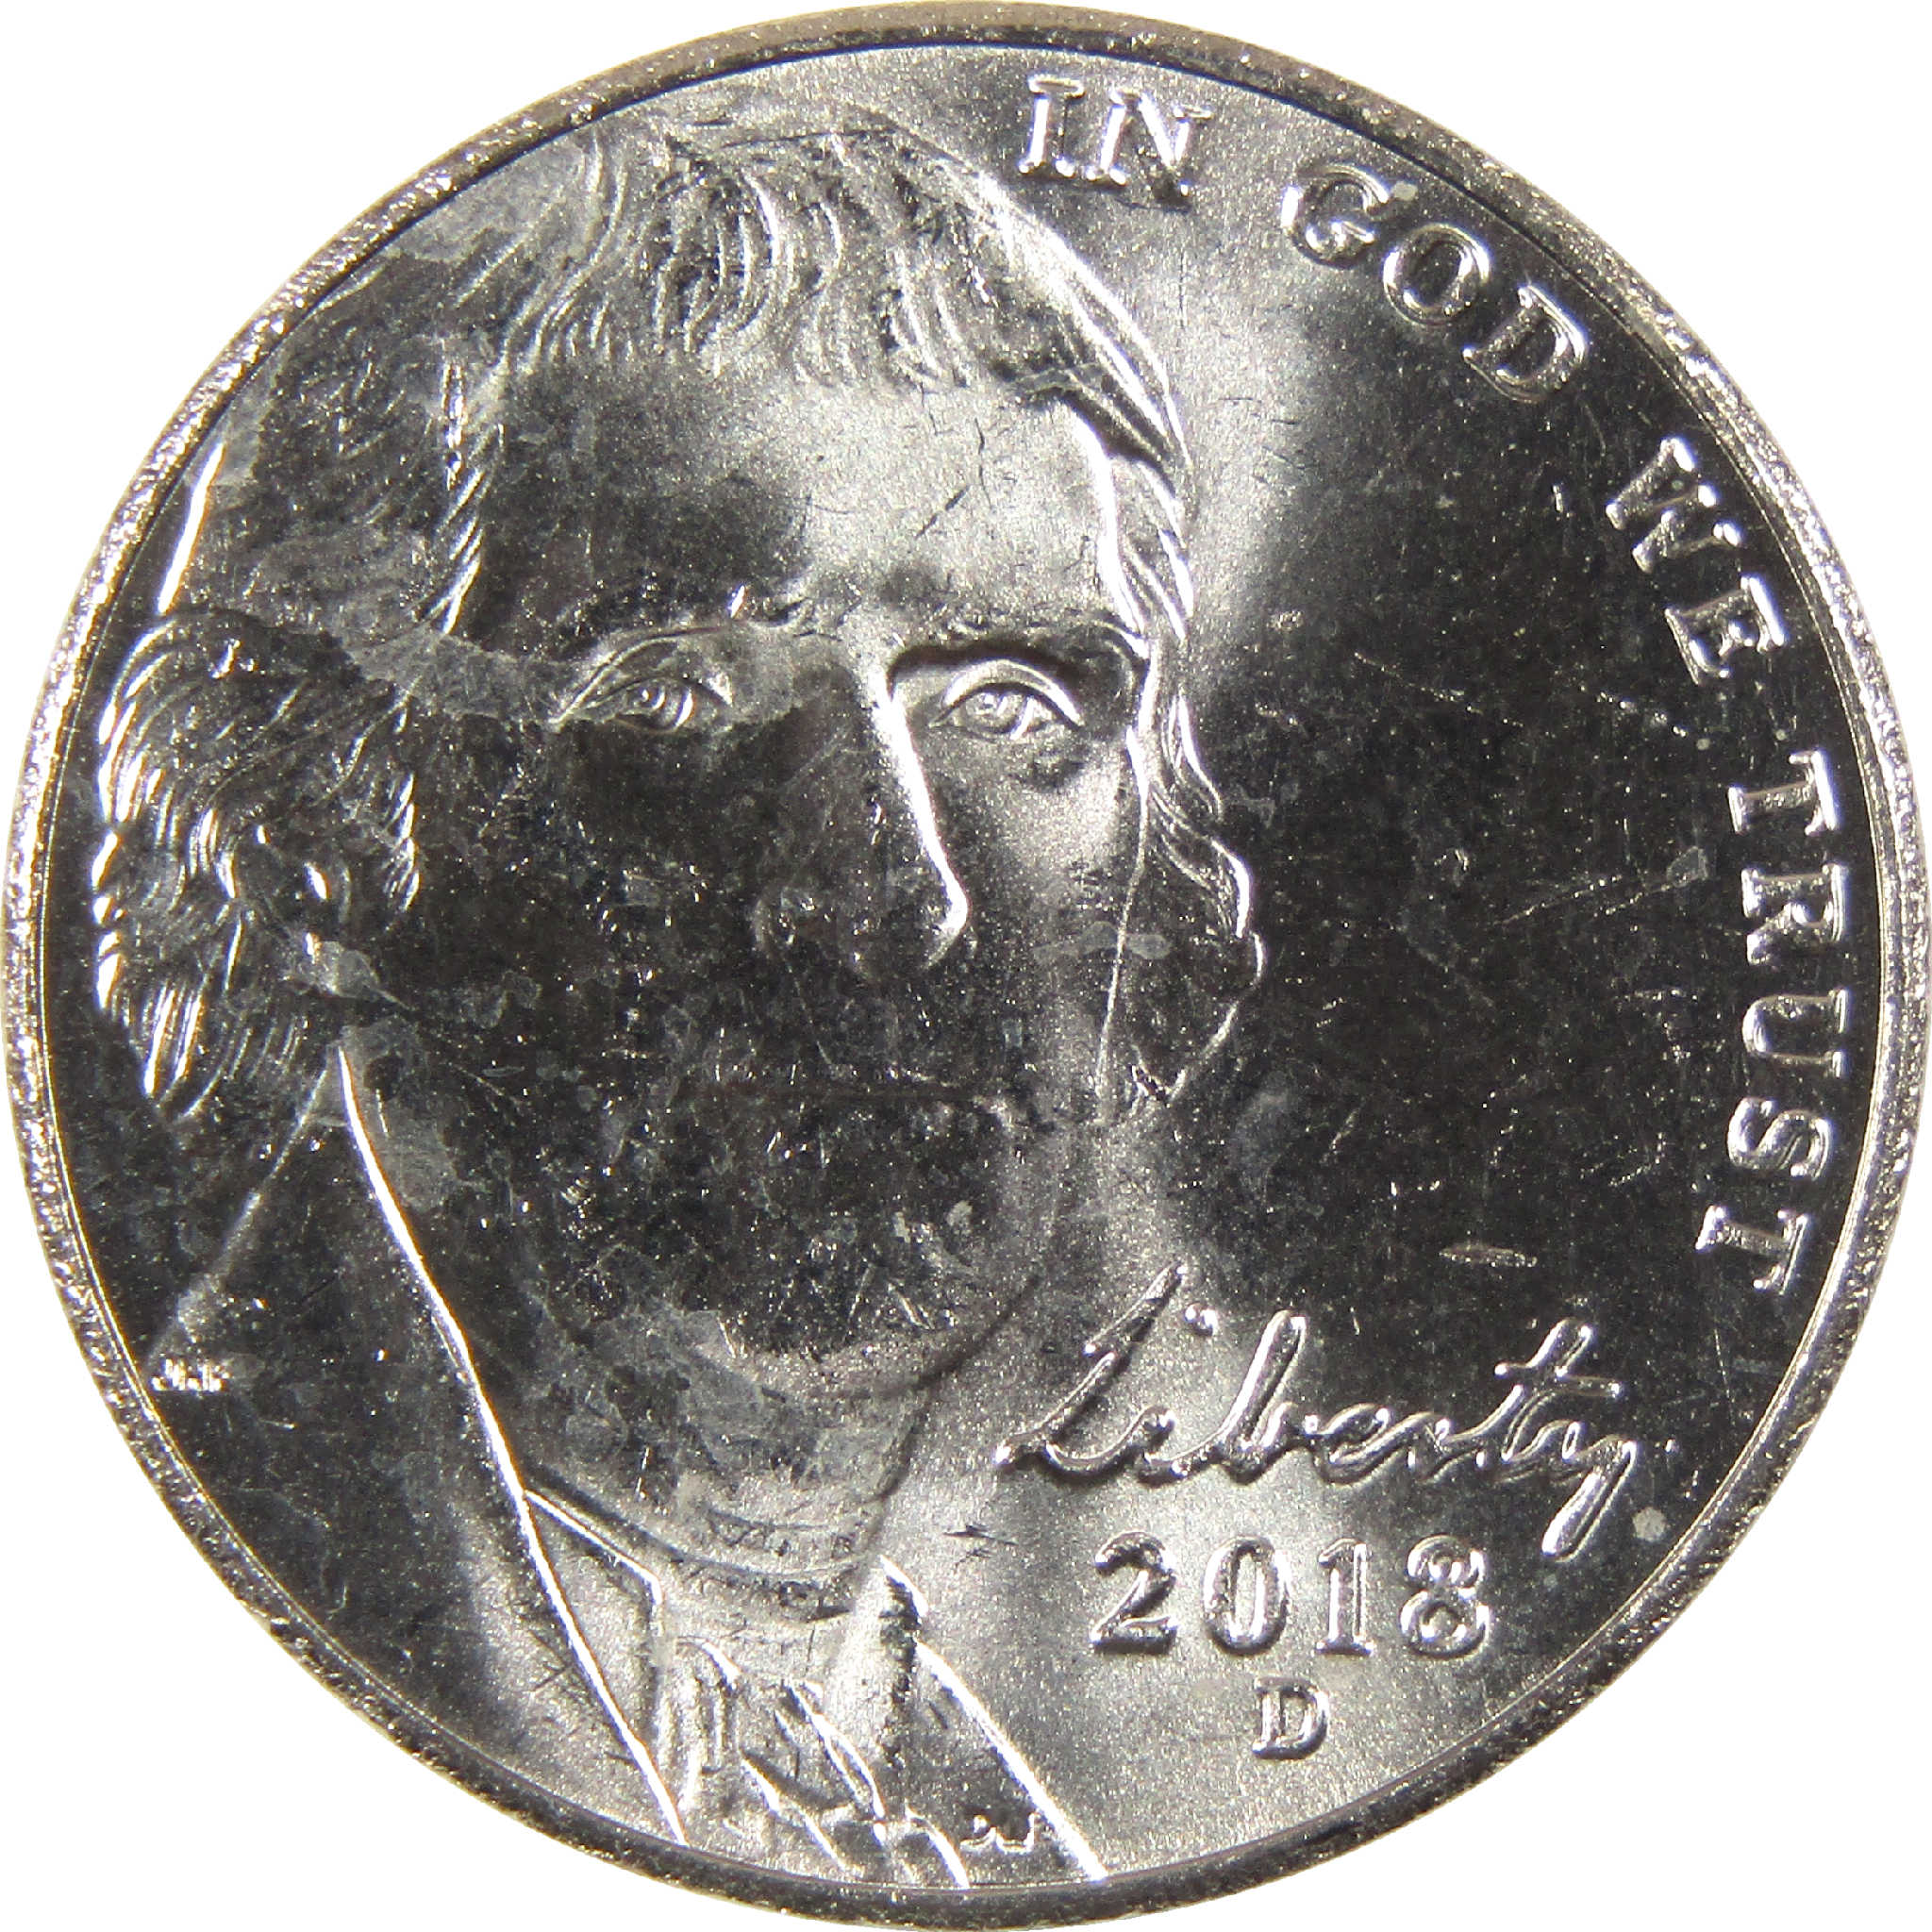 2018 D Jefferson Nickel BU Uncirculated 5c Coin